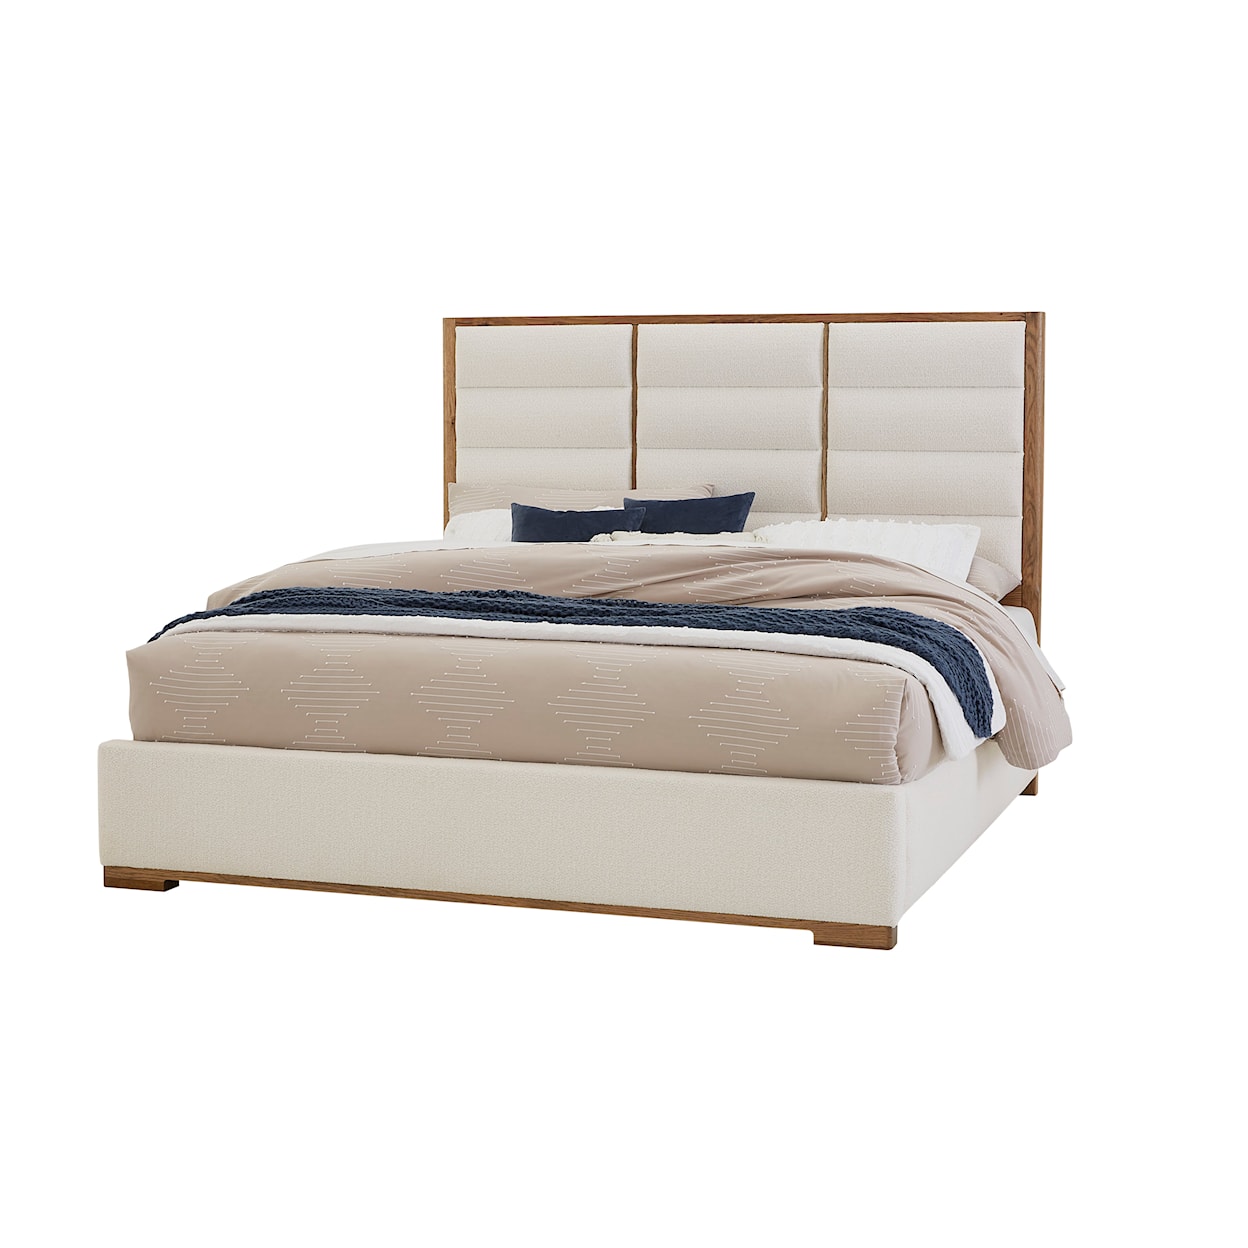 Vaughan-Bassett Charter Oak Upholstered Queen Panel Bedroom Set